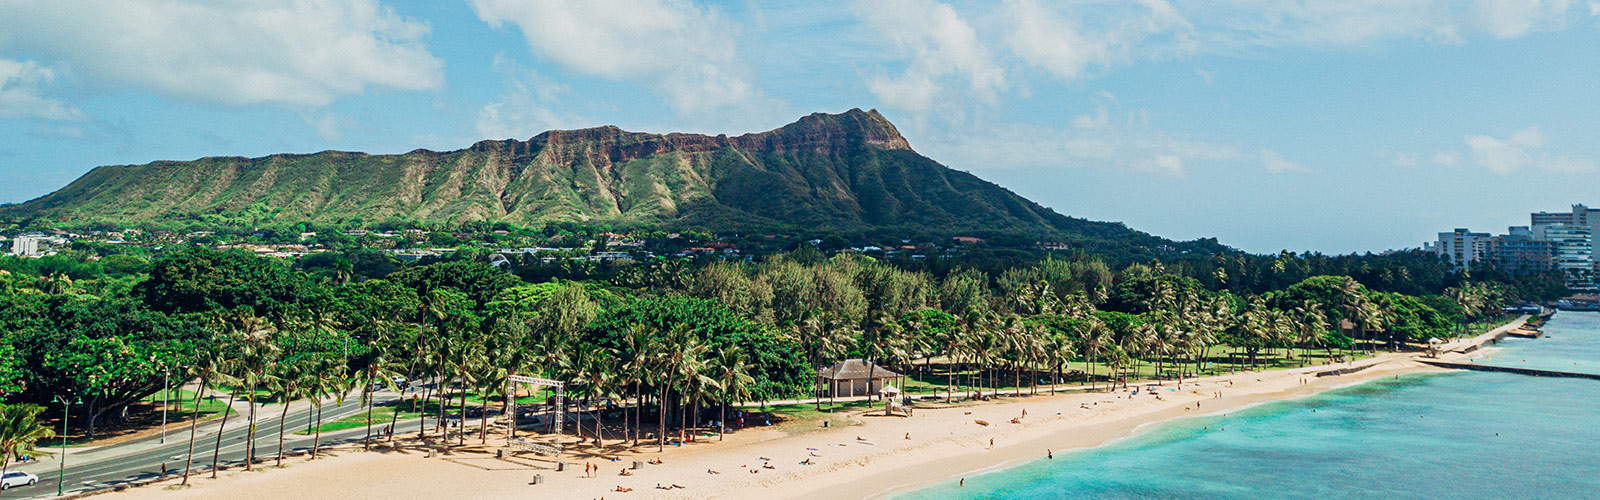 Breathtaking view of Diamond Head and beach in Oahu, Hawaii 